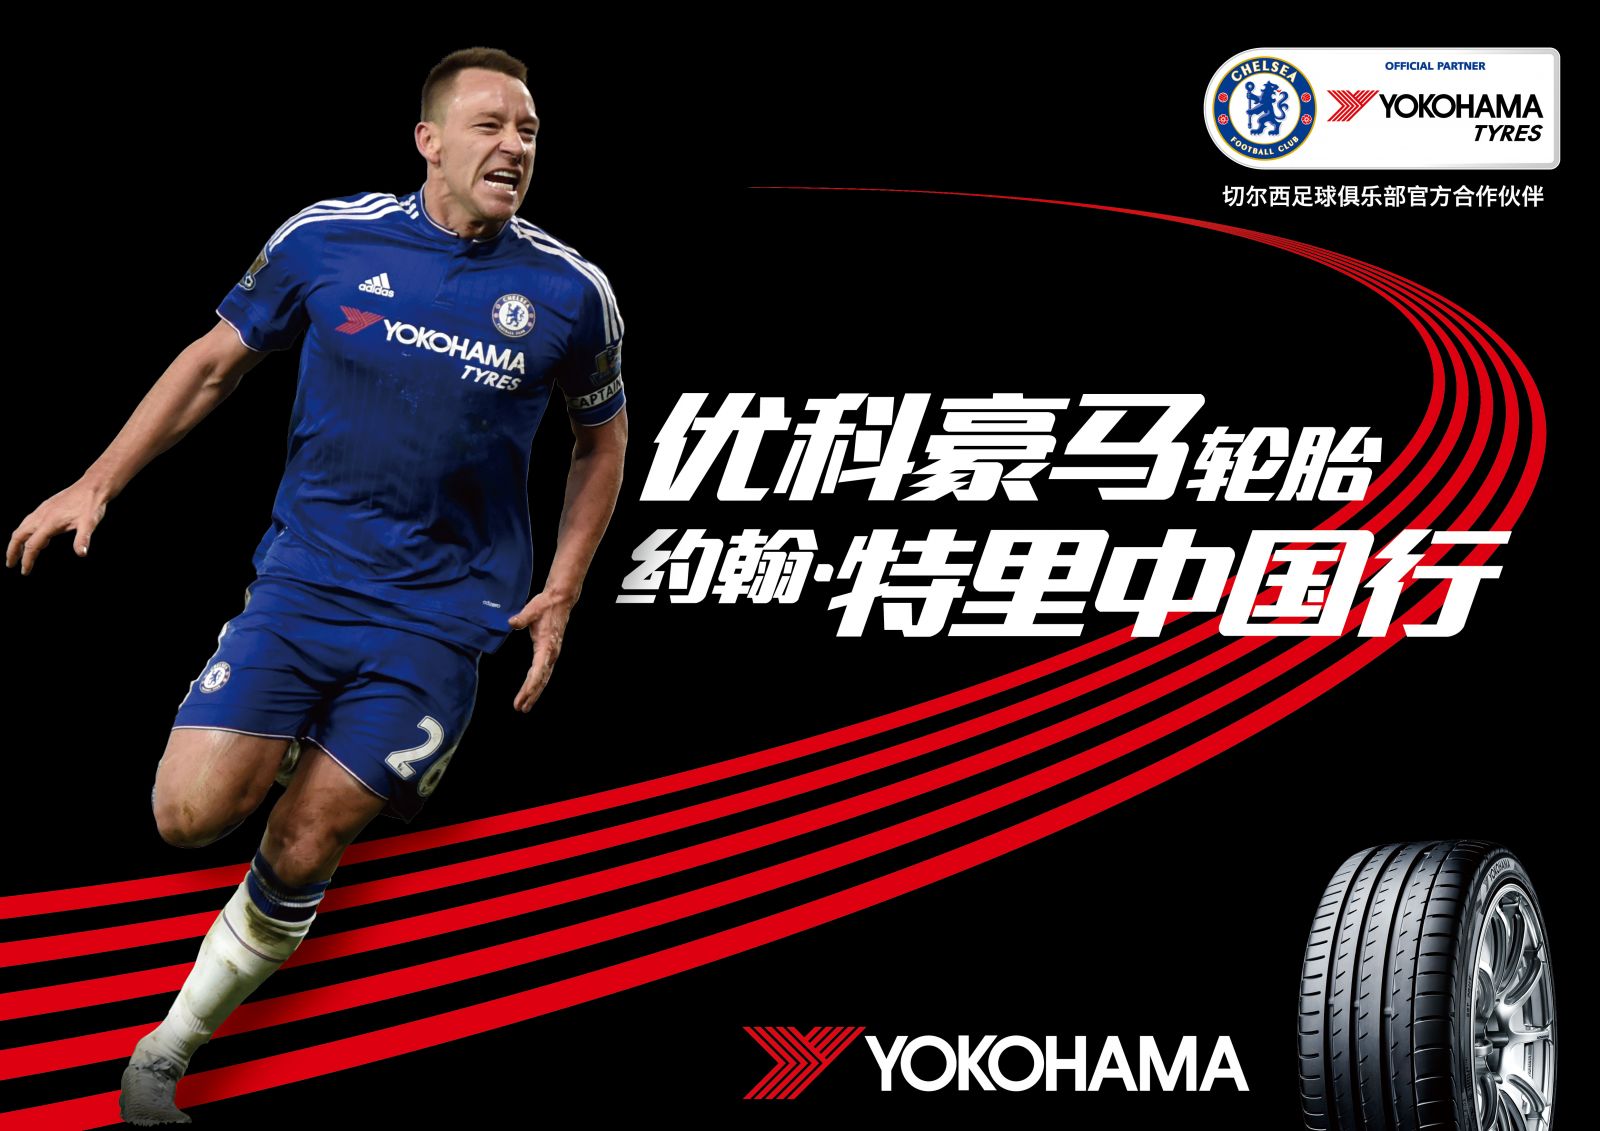 Yokohama introducing Chelsea Captain John Terry to Chinese fans